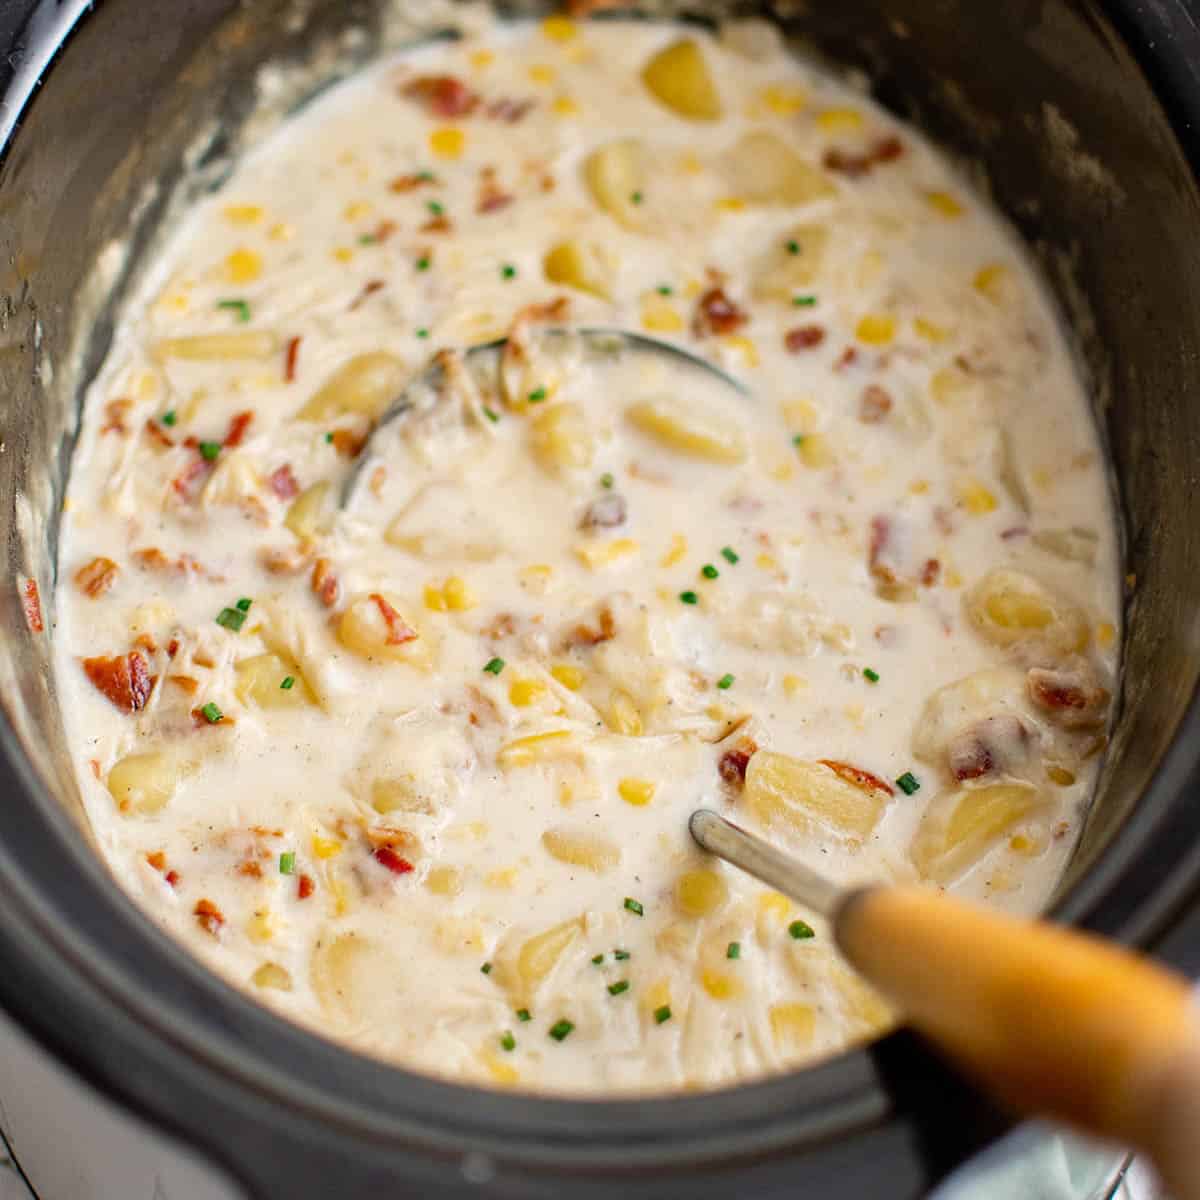 Classic Corn Chowder Recipe: How to Make It